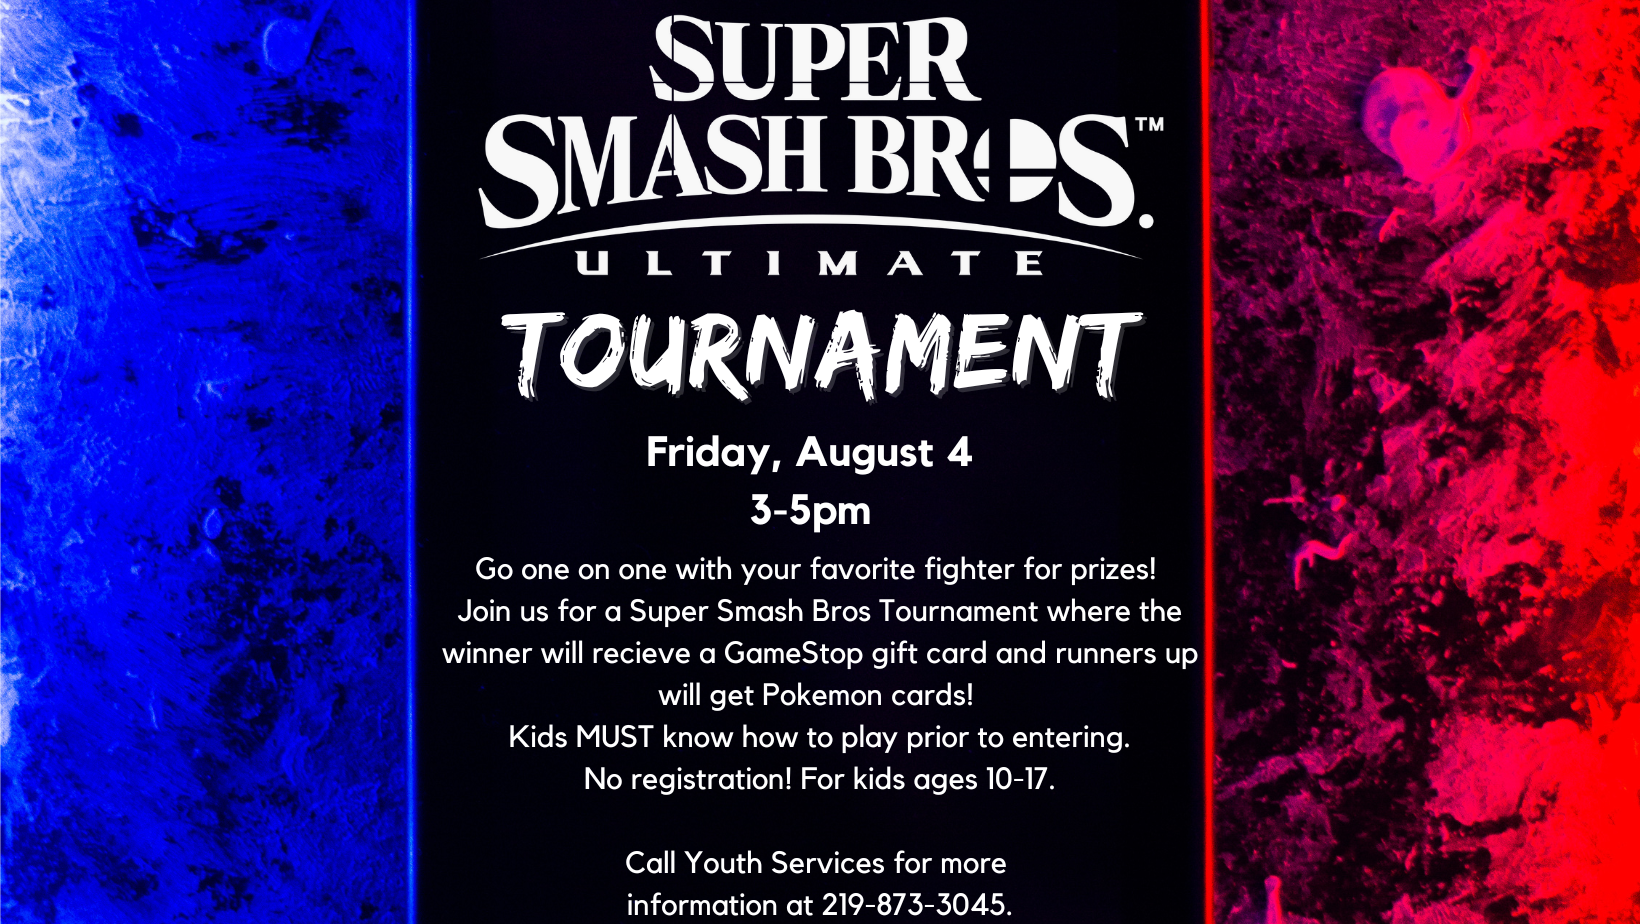 Super Smash Bros tournament, Friday, August 4